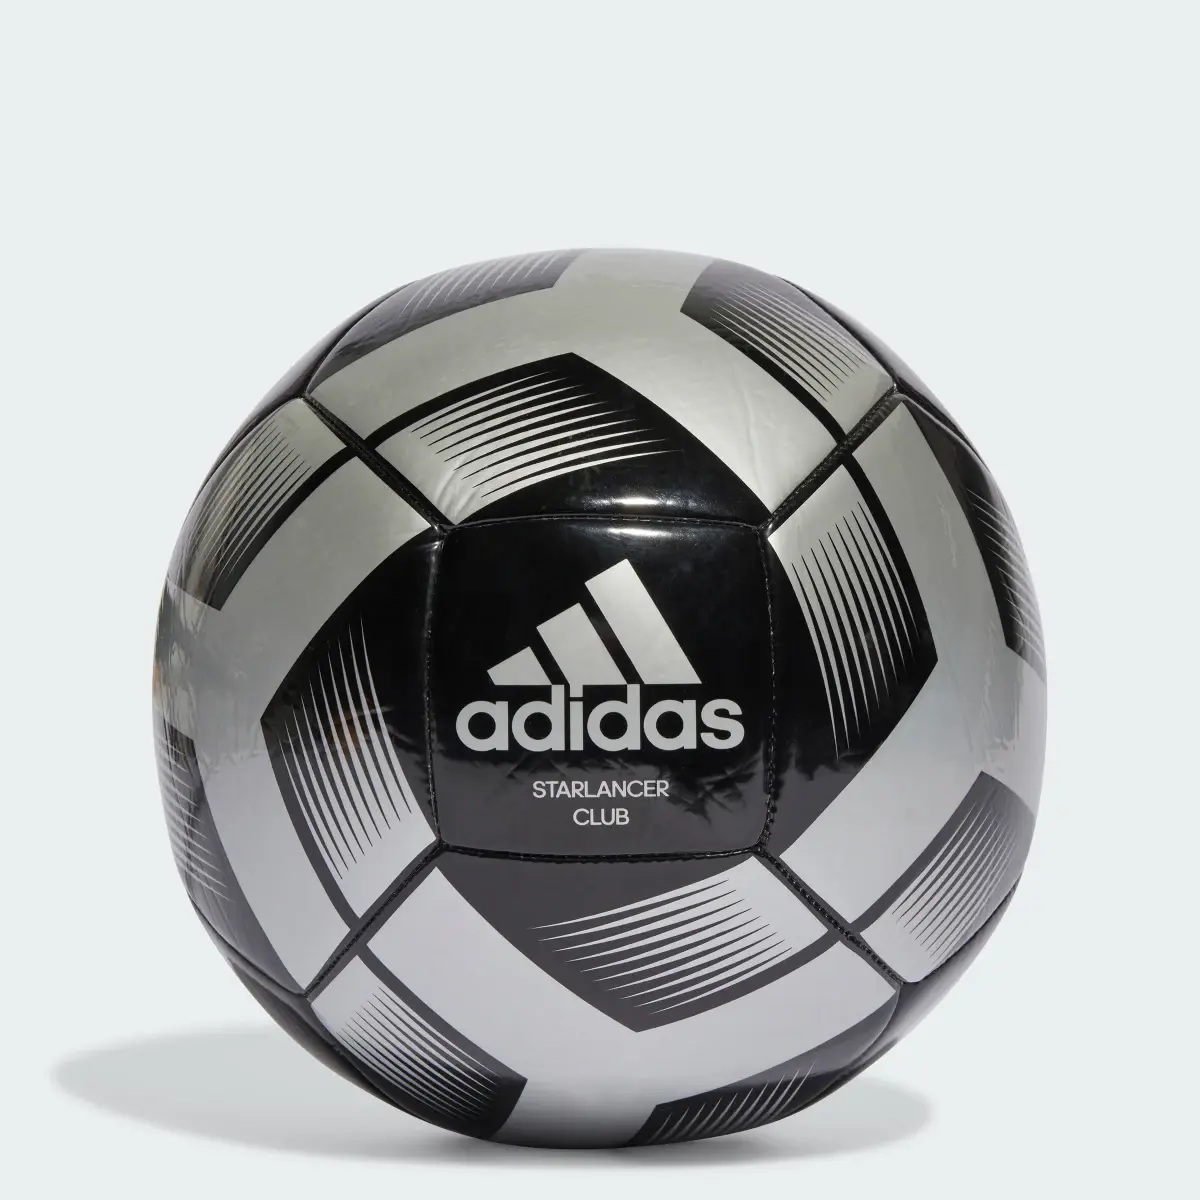 Adidas Starlancer Club Football. 1